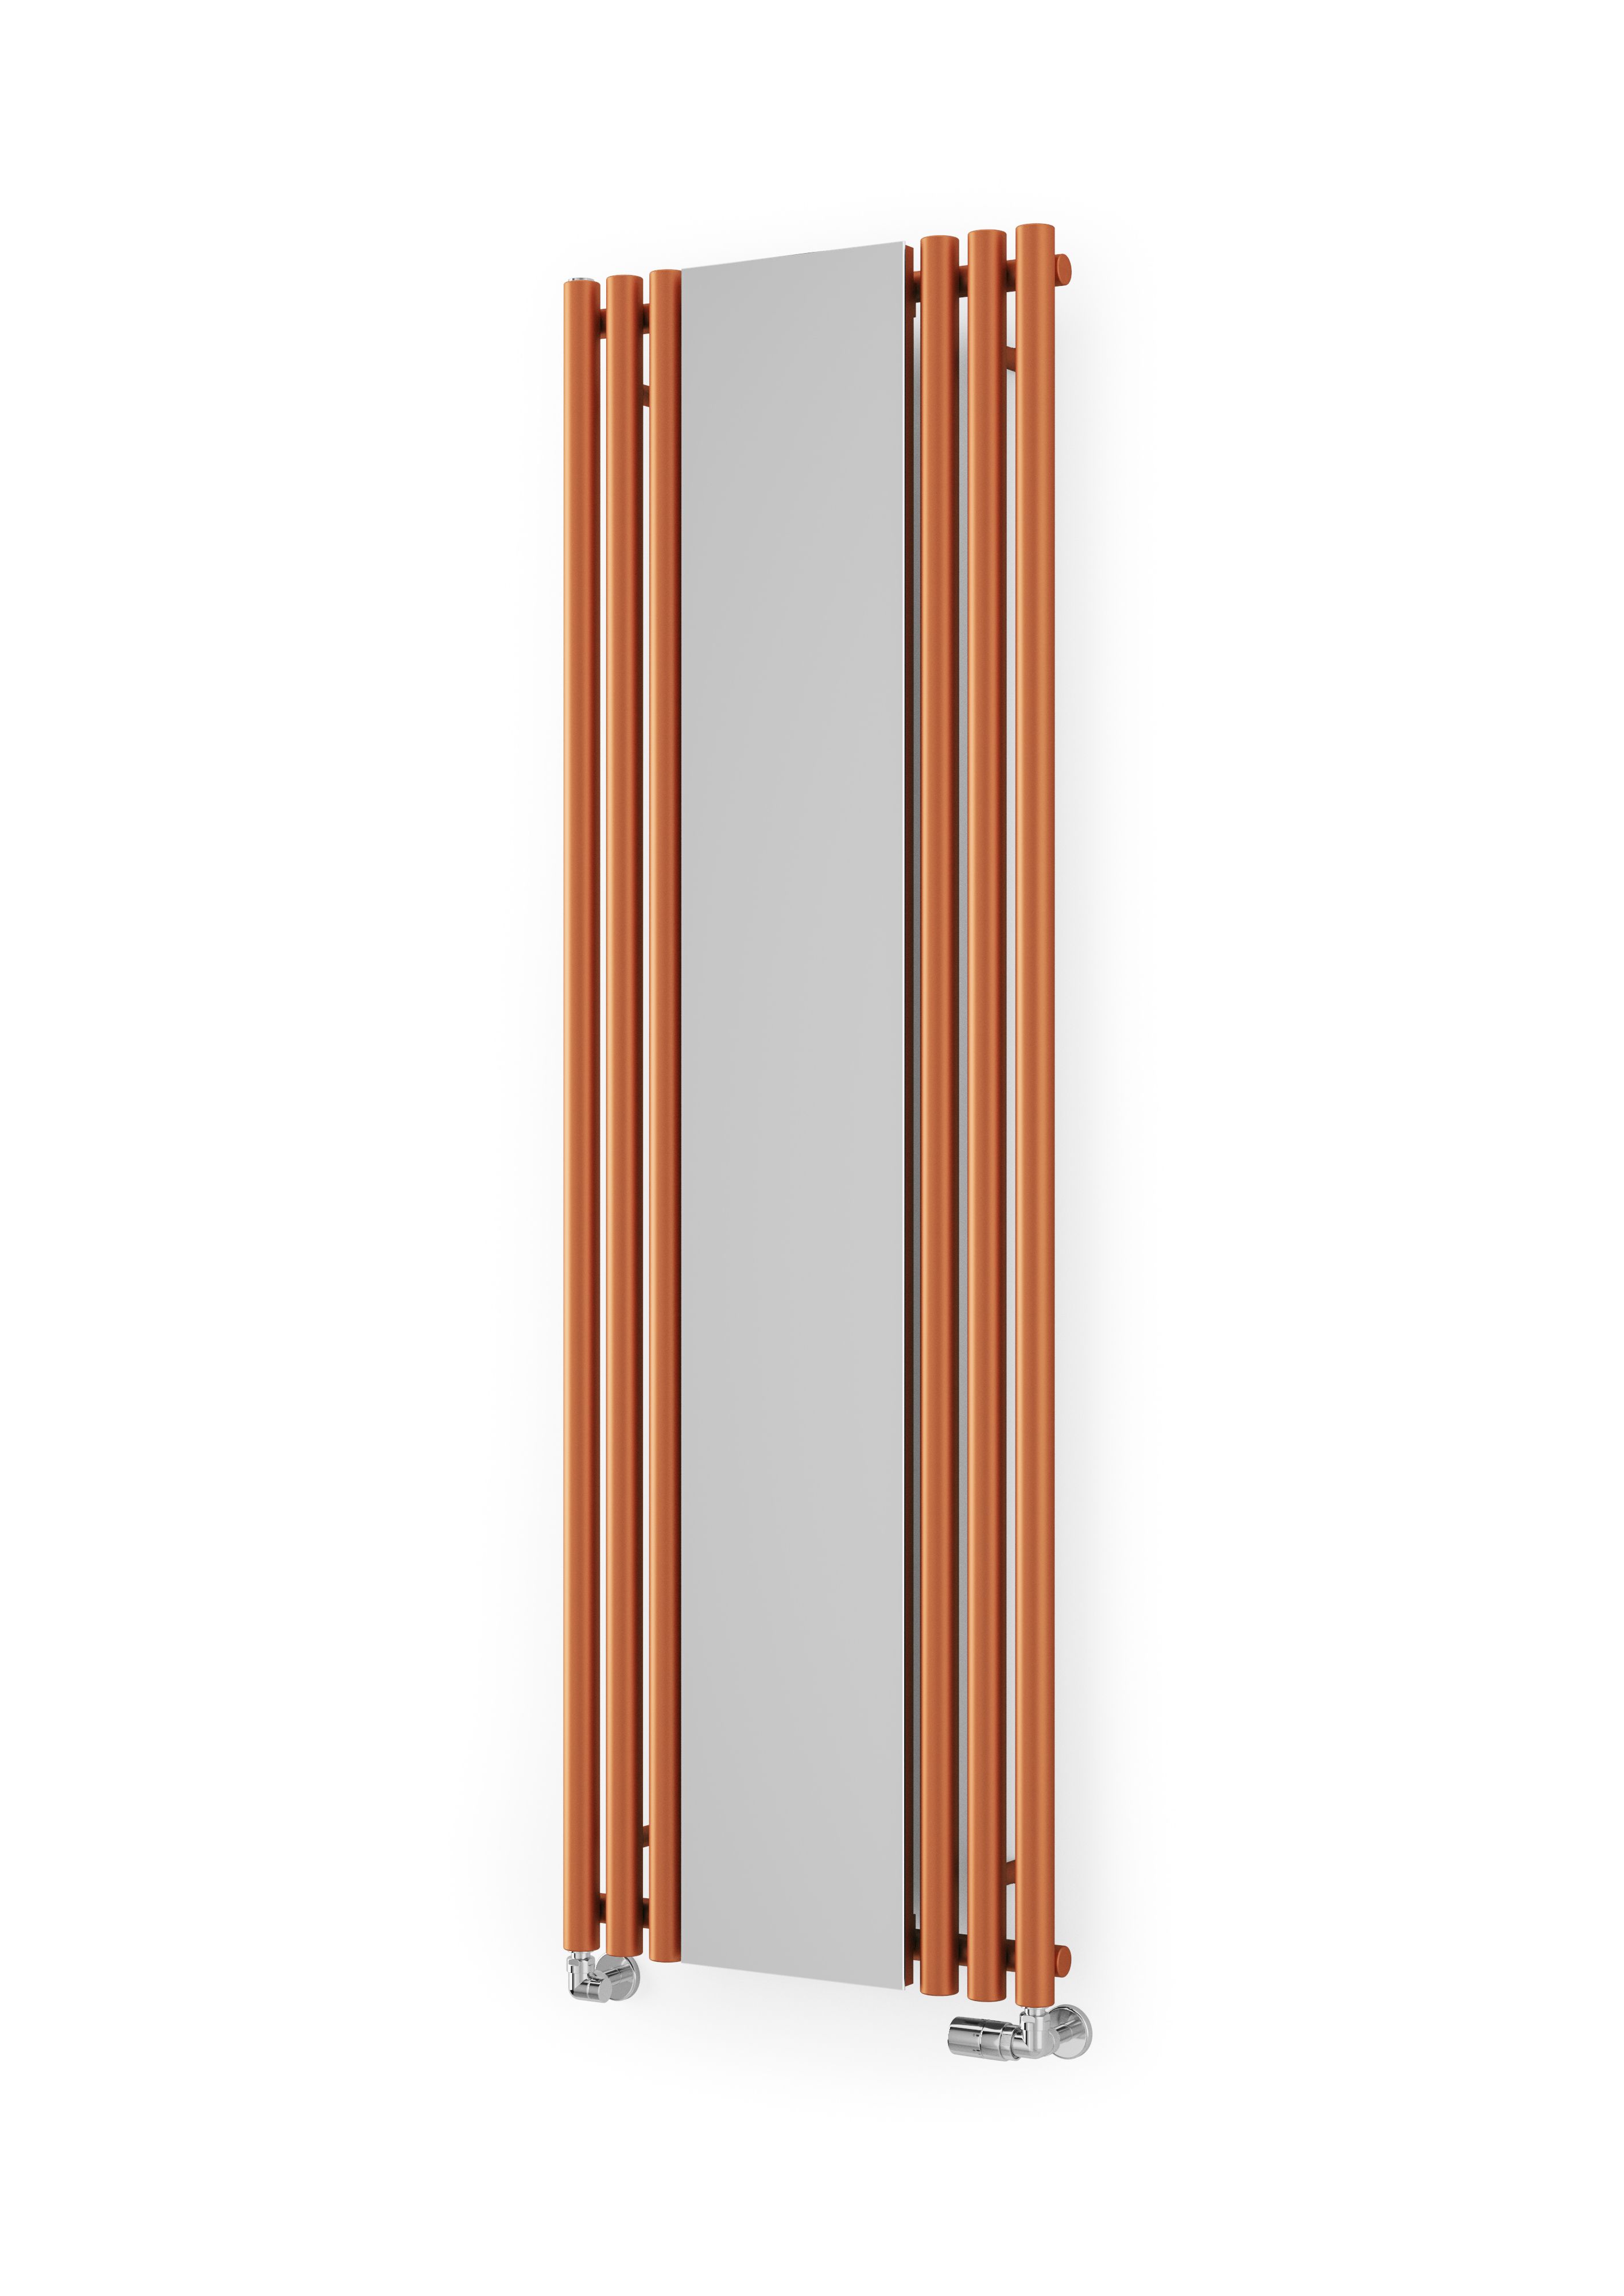 TERMOARREDO PITTURA MATERICA Aluminium decorative radiator / decorative  radiator By Termo Design